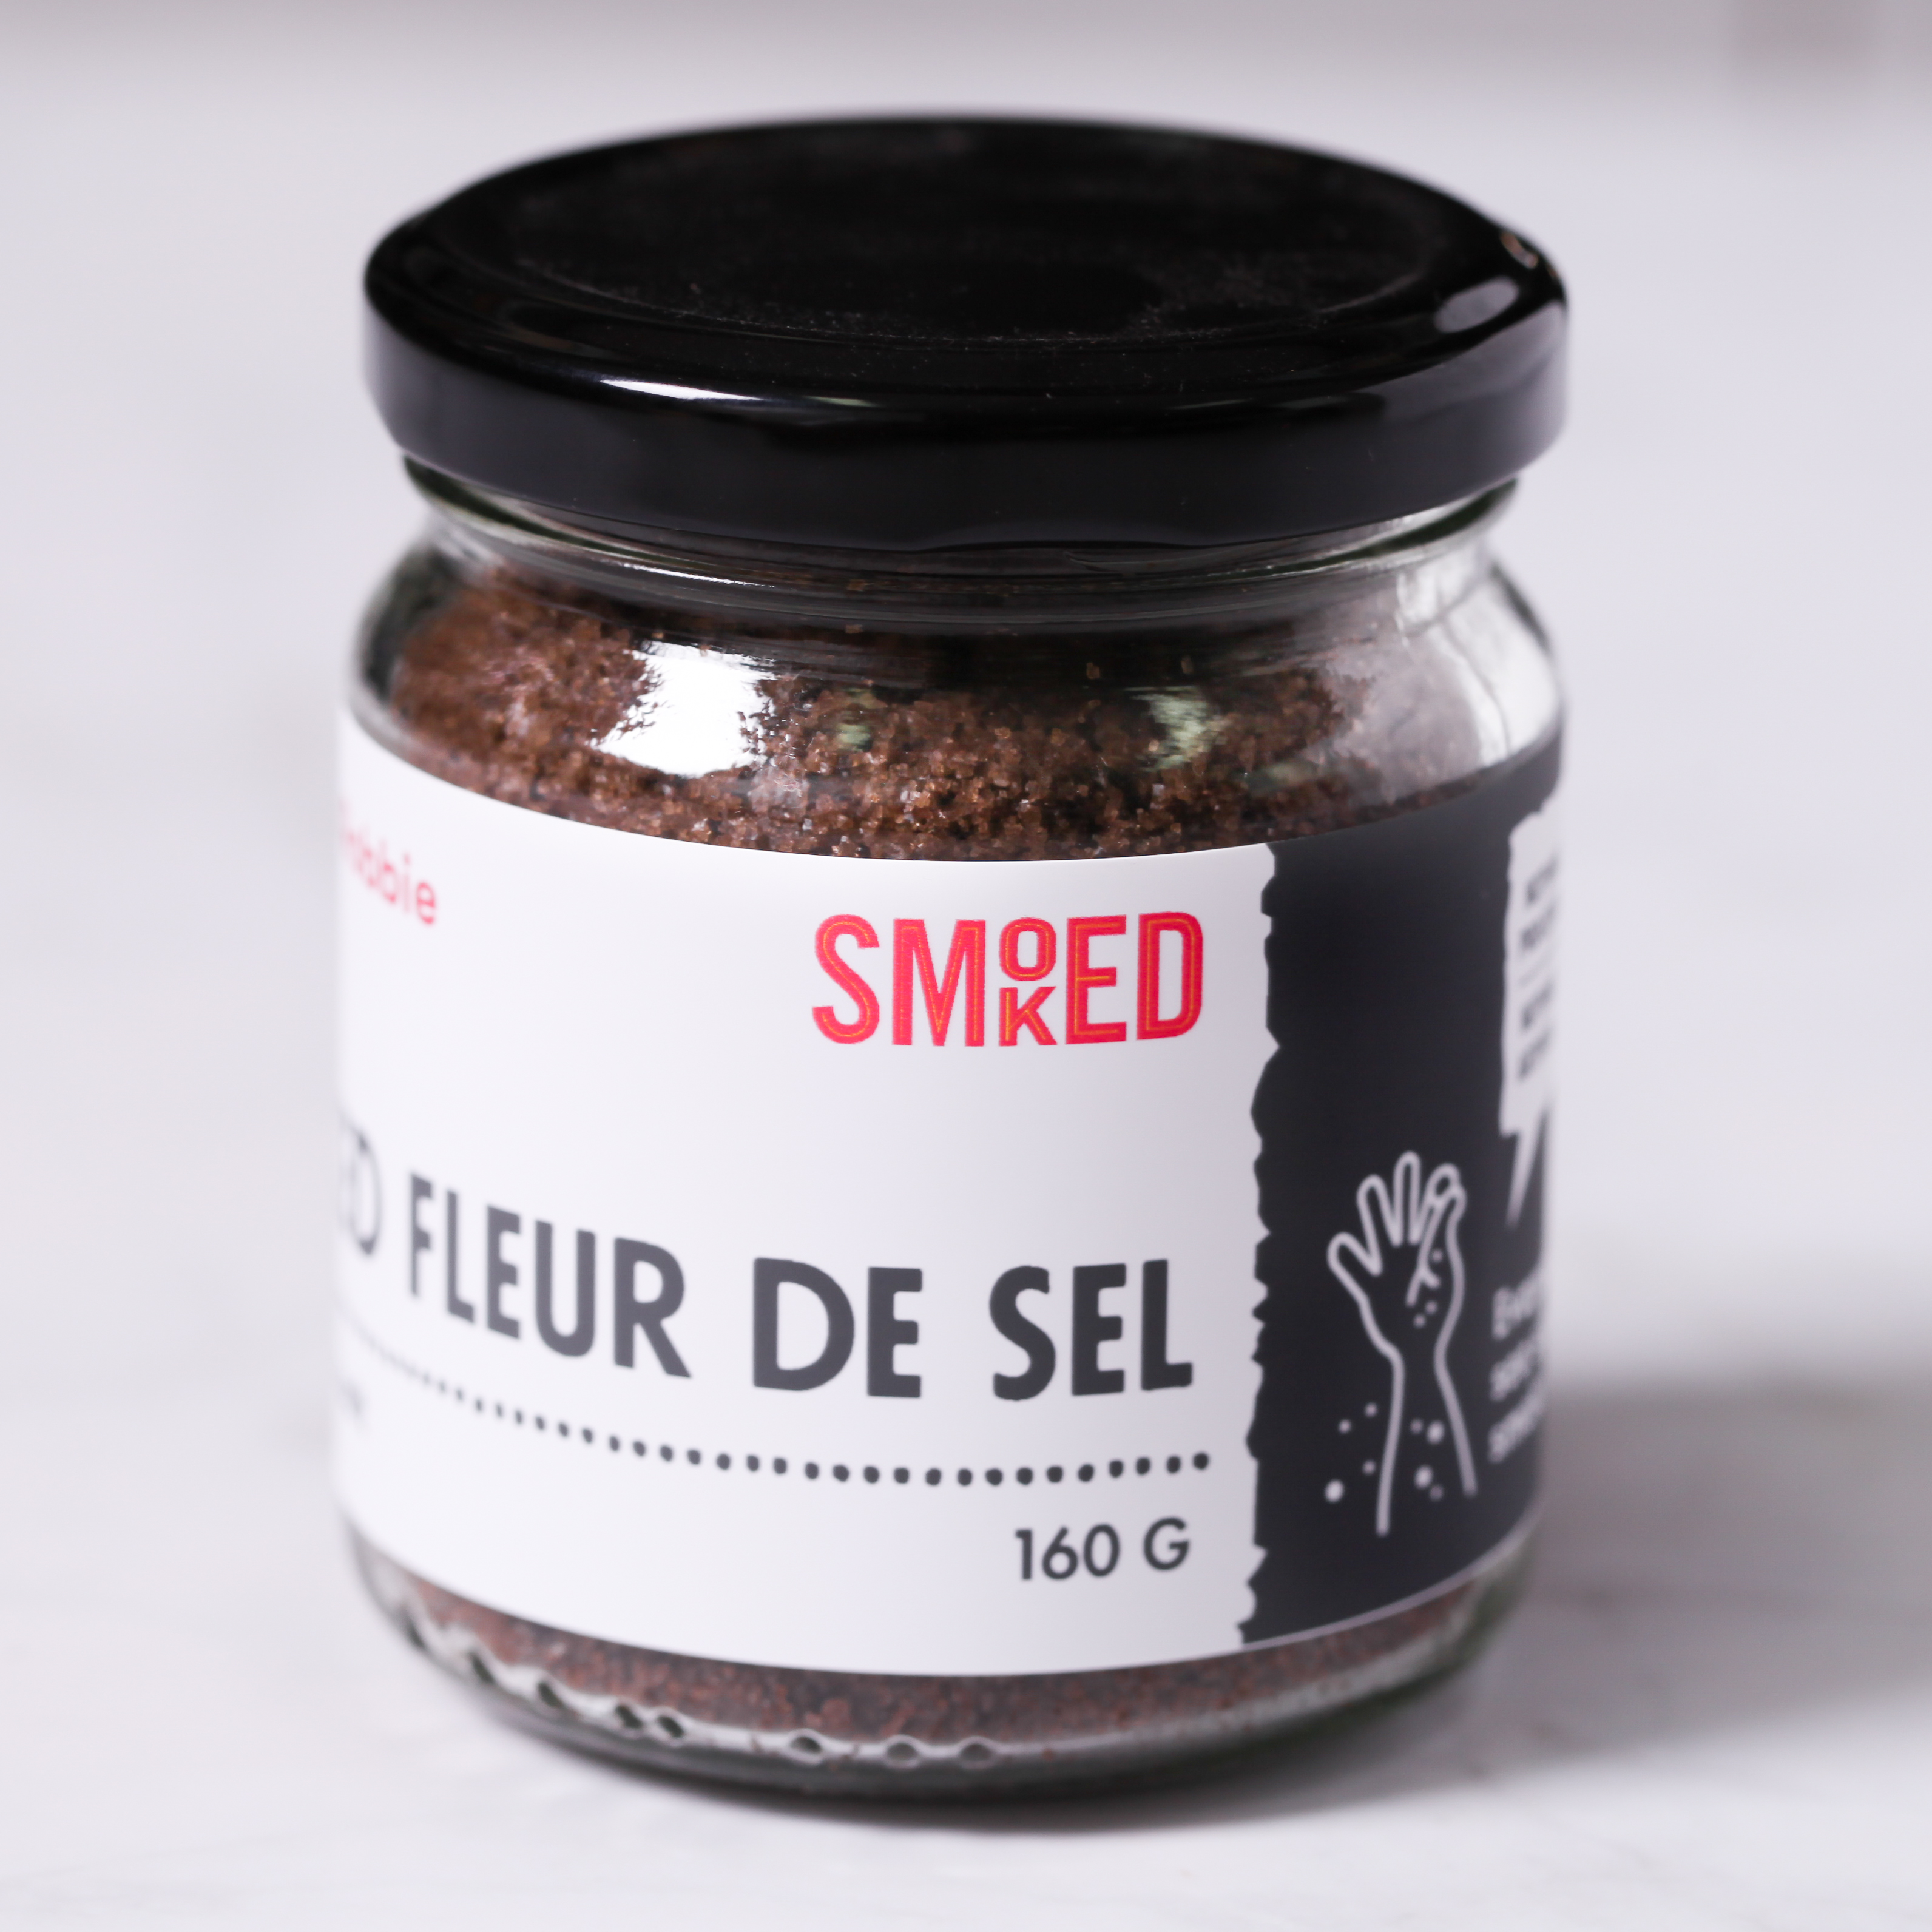 Smoked Fleur de Sel (Natural Sea Salt)